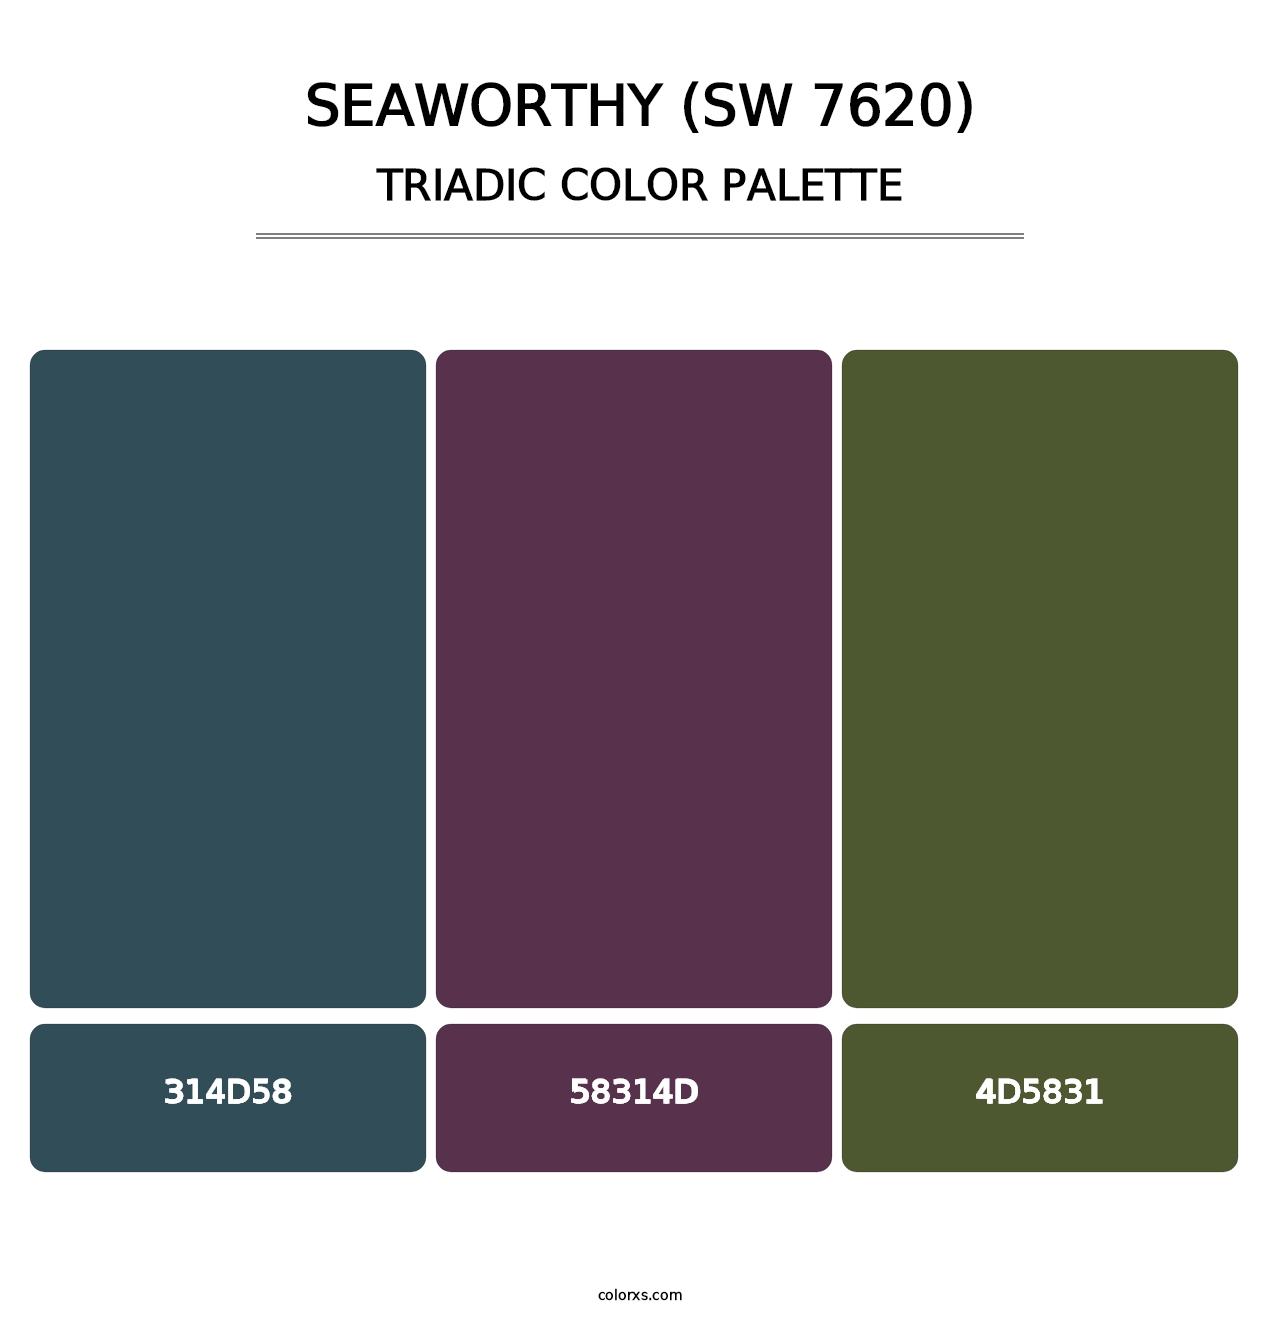 Seaworthy (SW 7620) - Triadic Color Palette